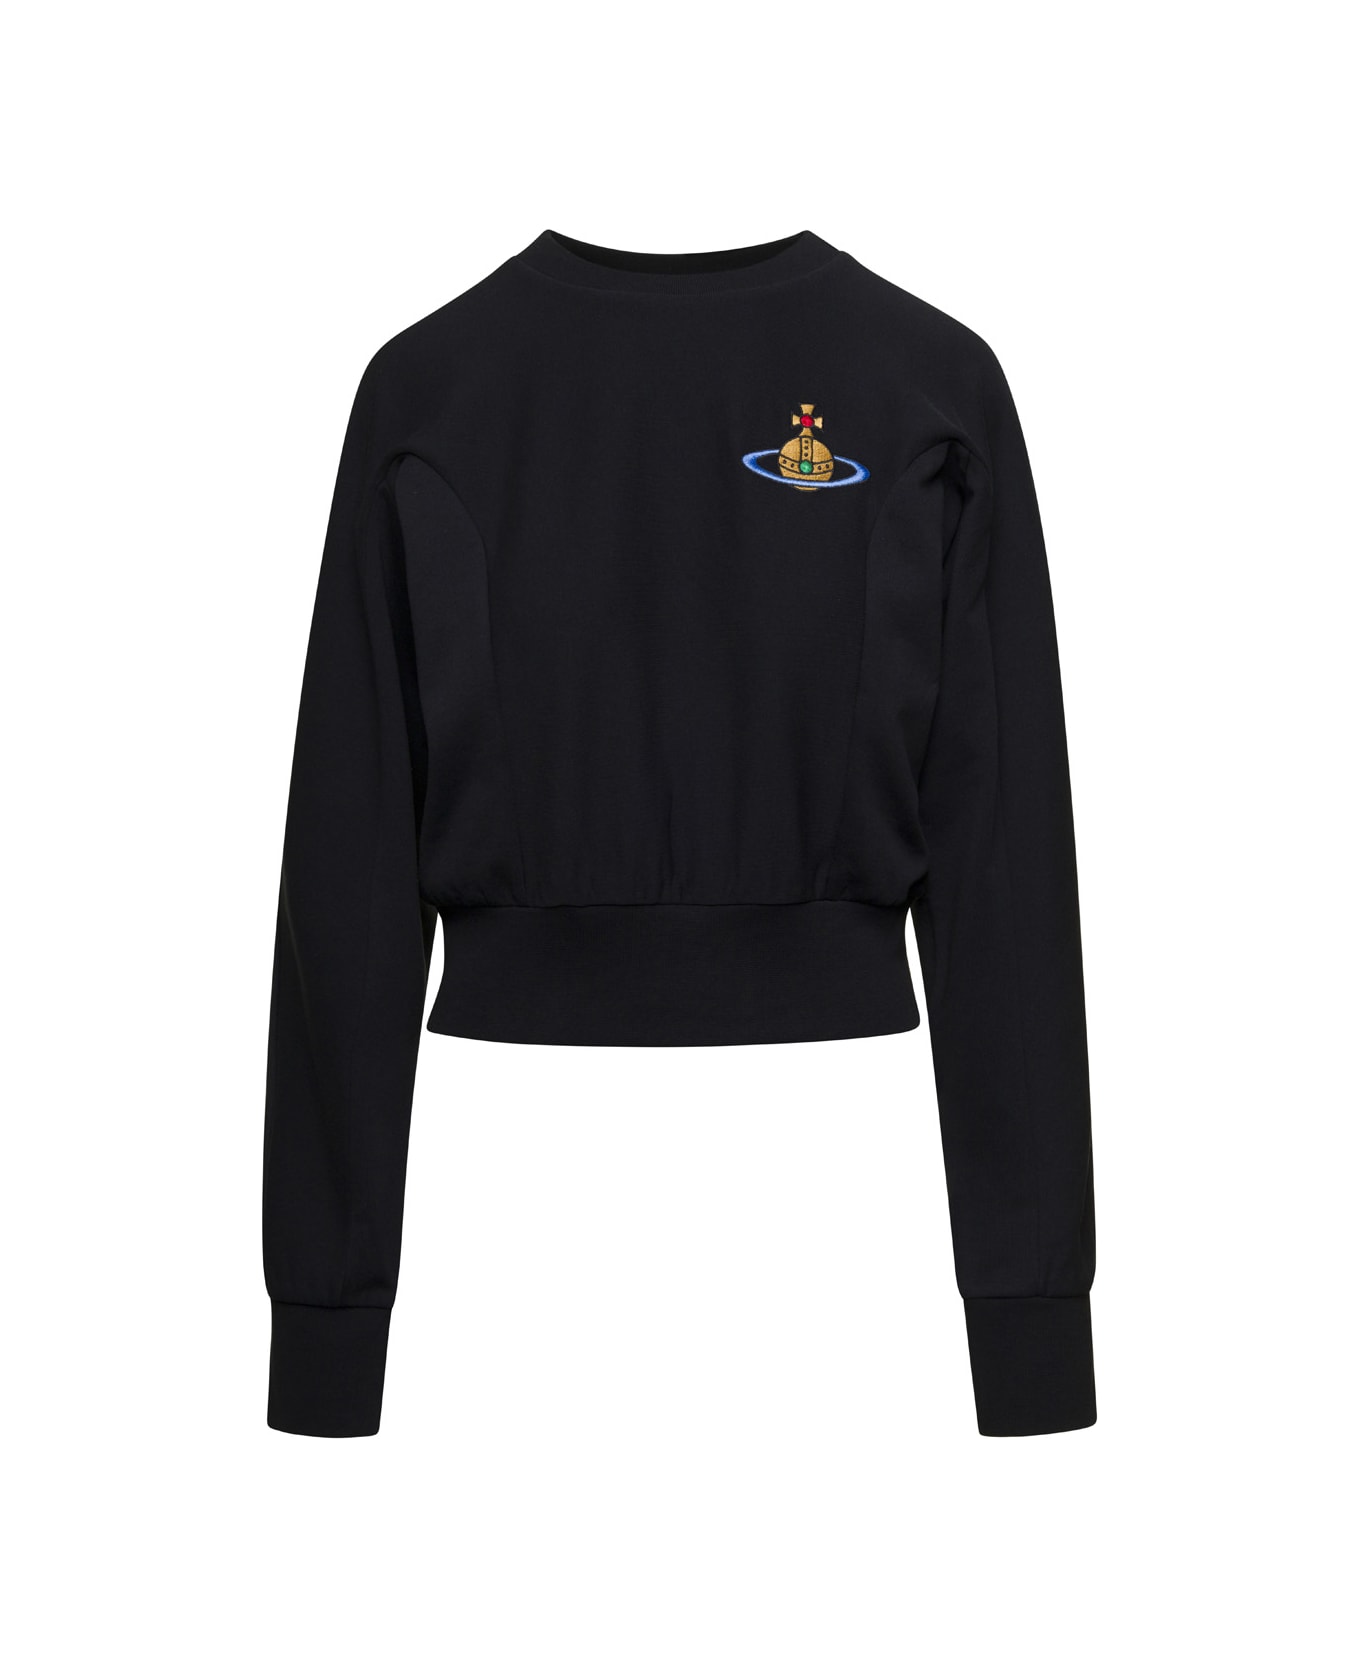 Vivienne Westwood Black Crewneck Sweatshirt With Embroidered Orb Logo In Cotton Woman - Black ニットウェア